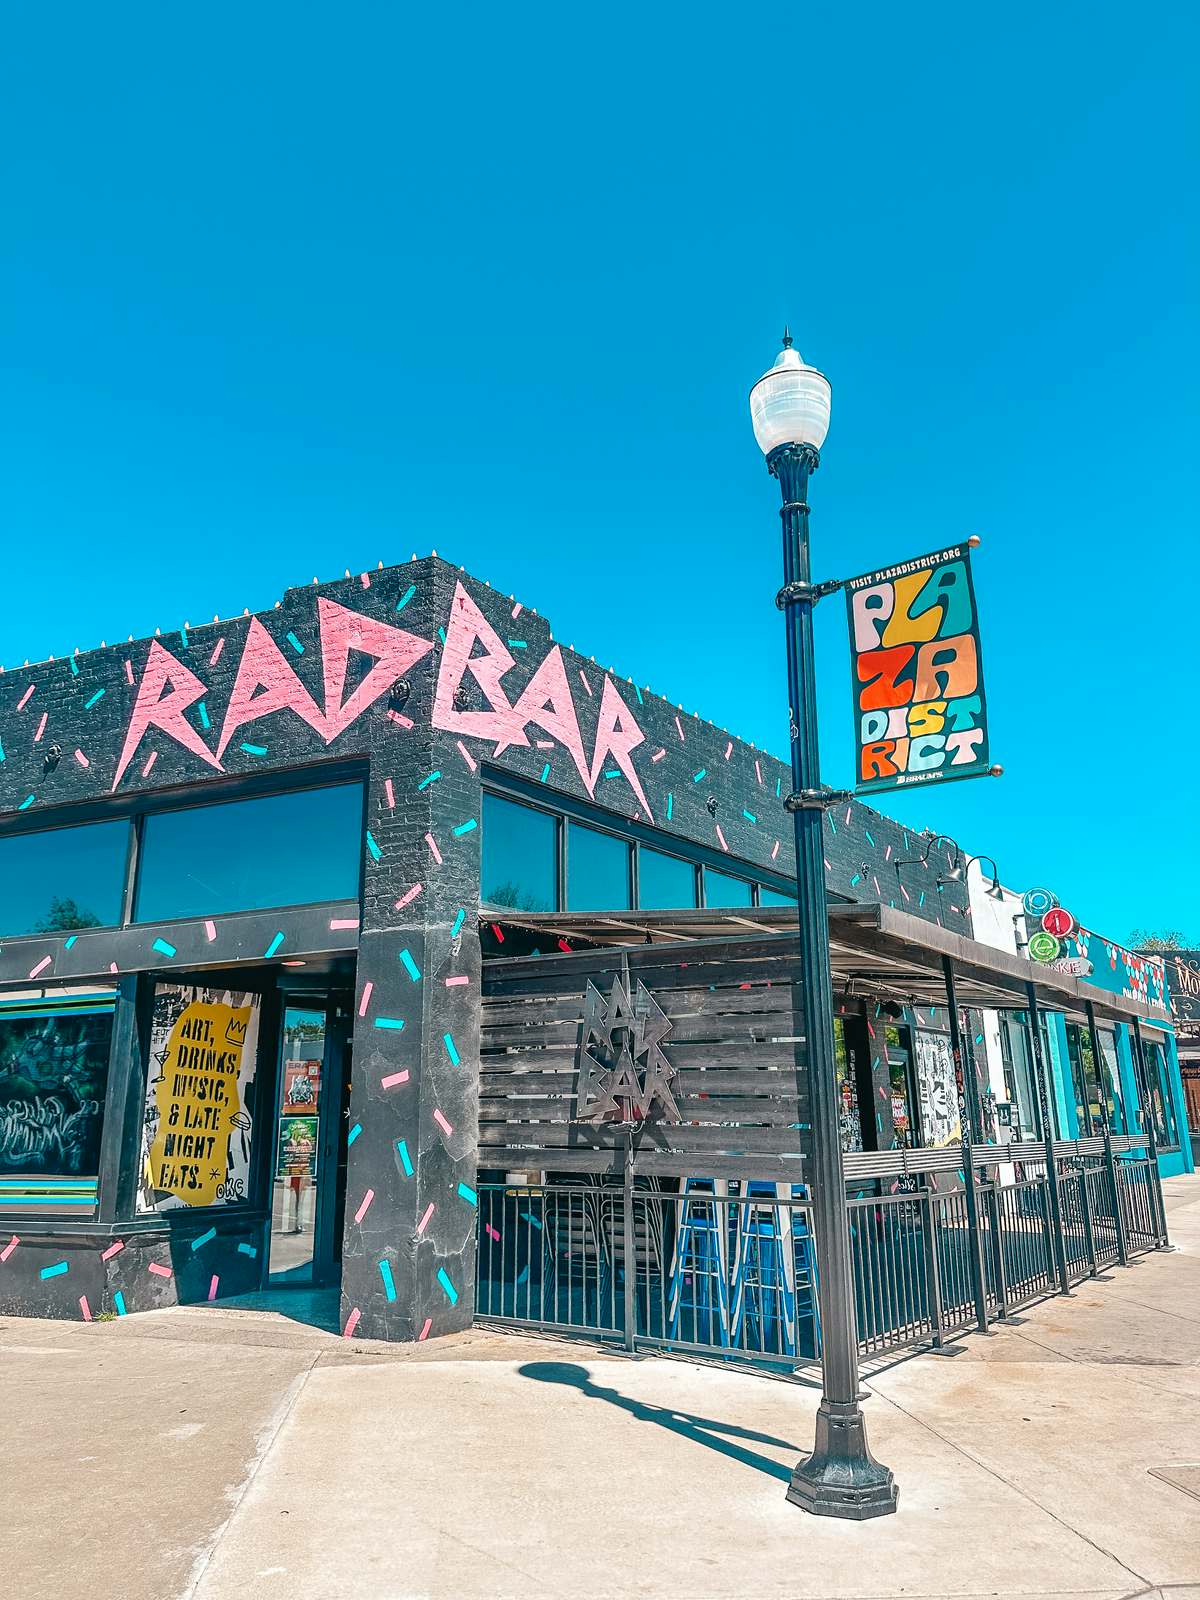 Rad Bar in the Plaza District in Oklahoma City